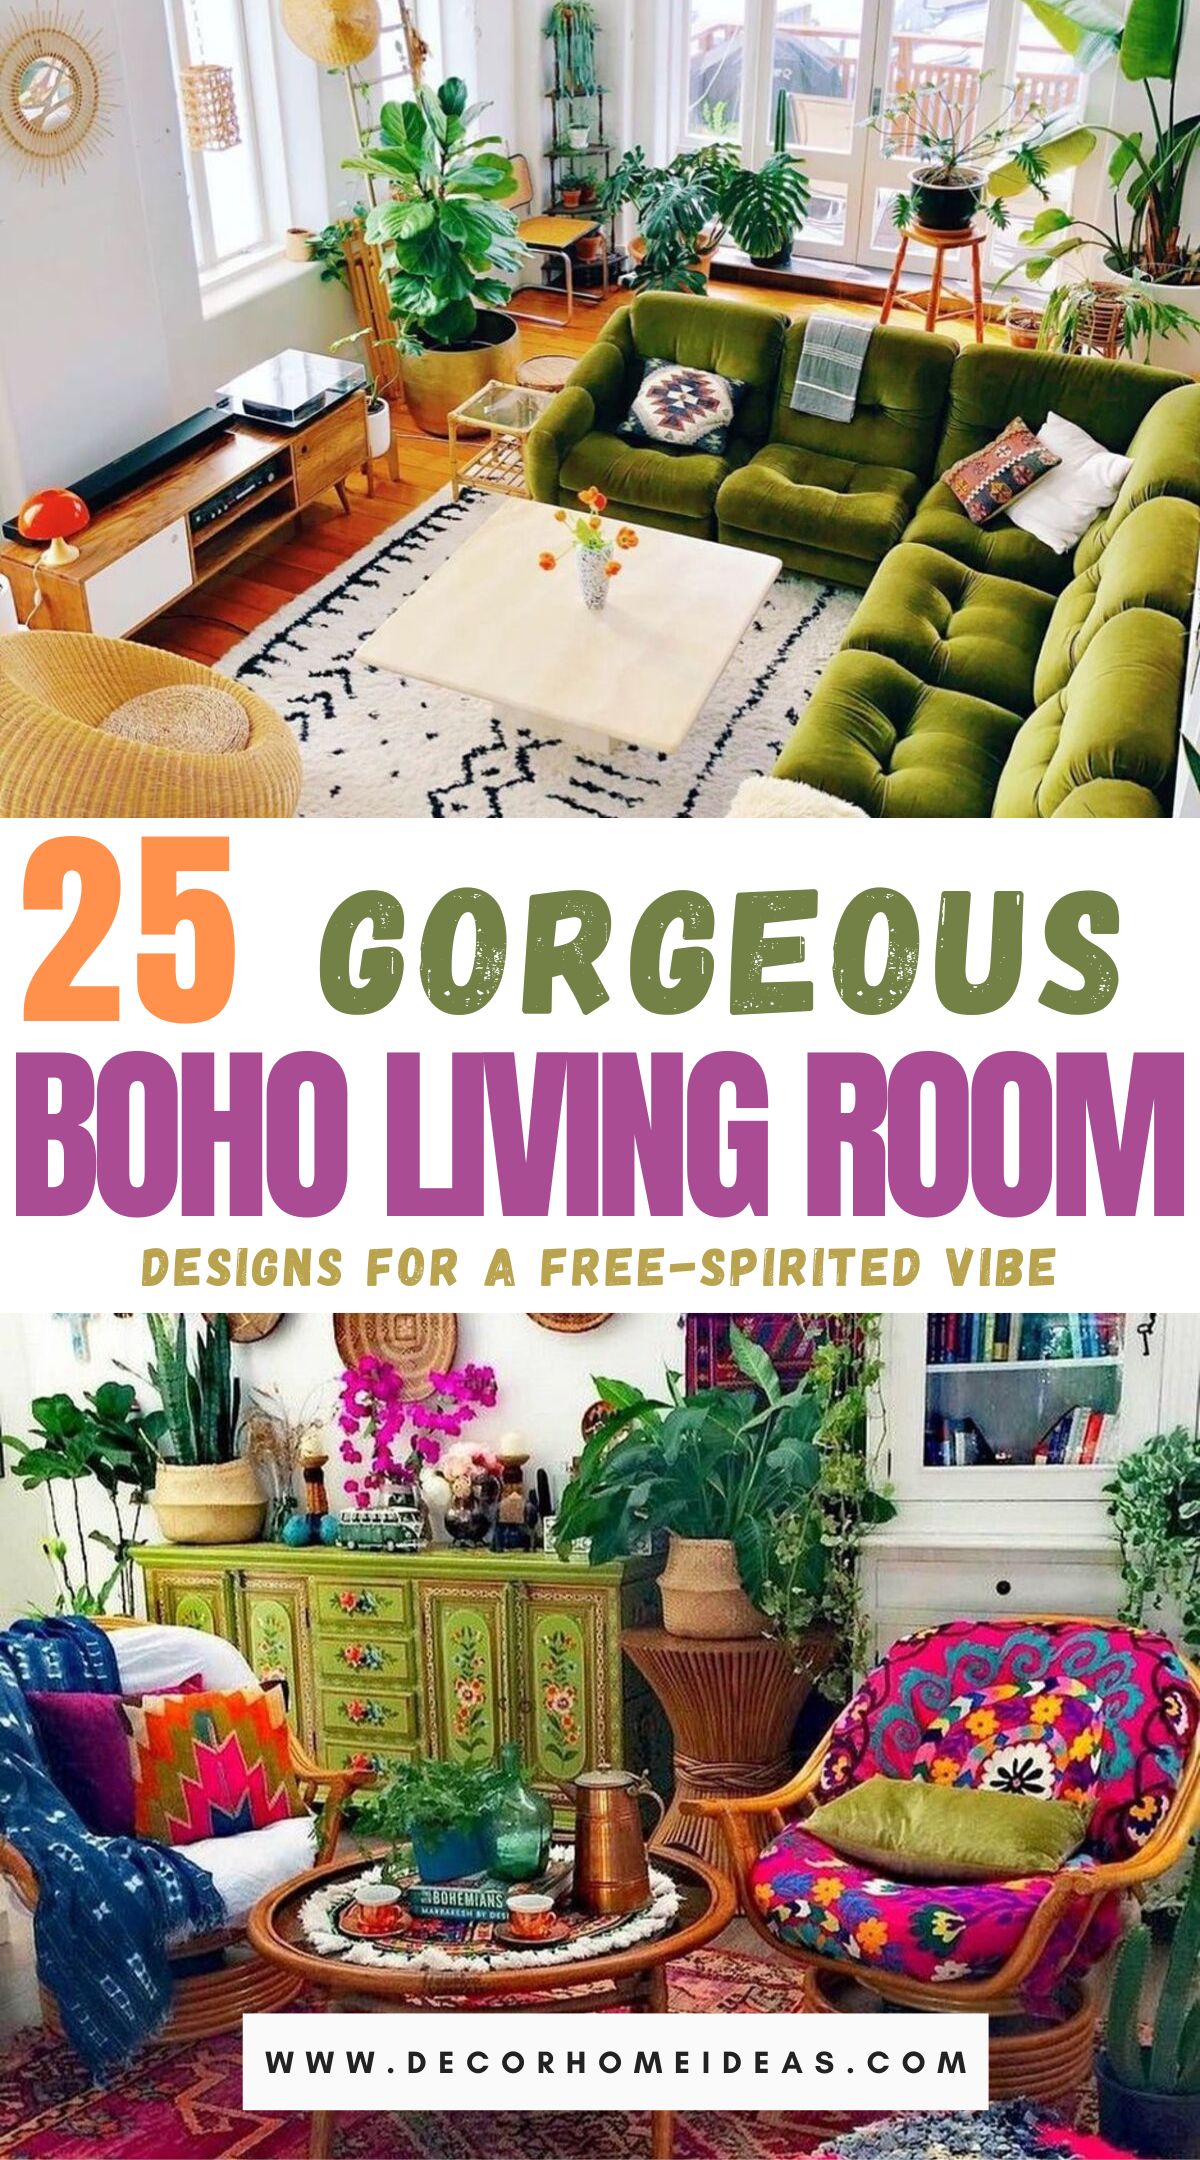 Best Bohemian Style Living Room Ideas